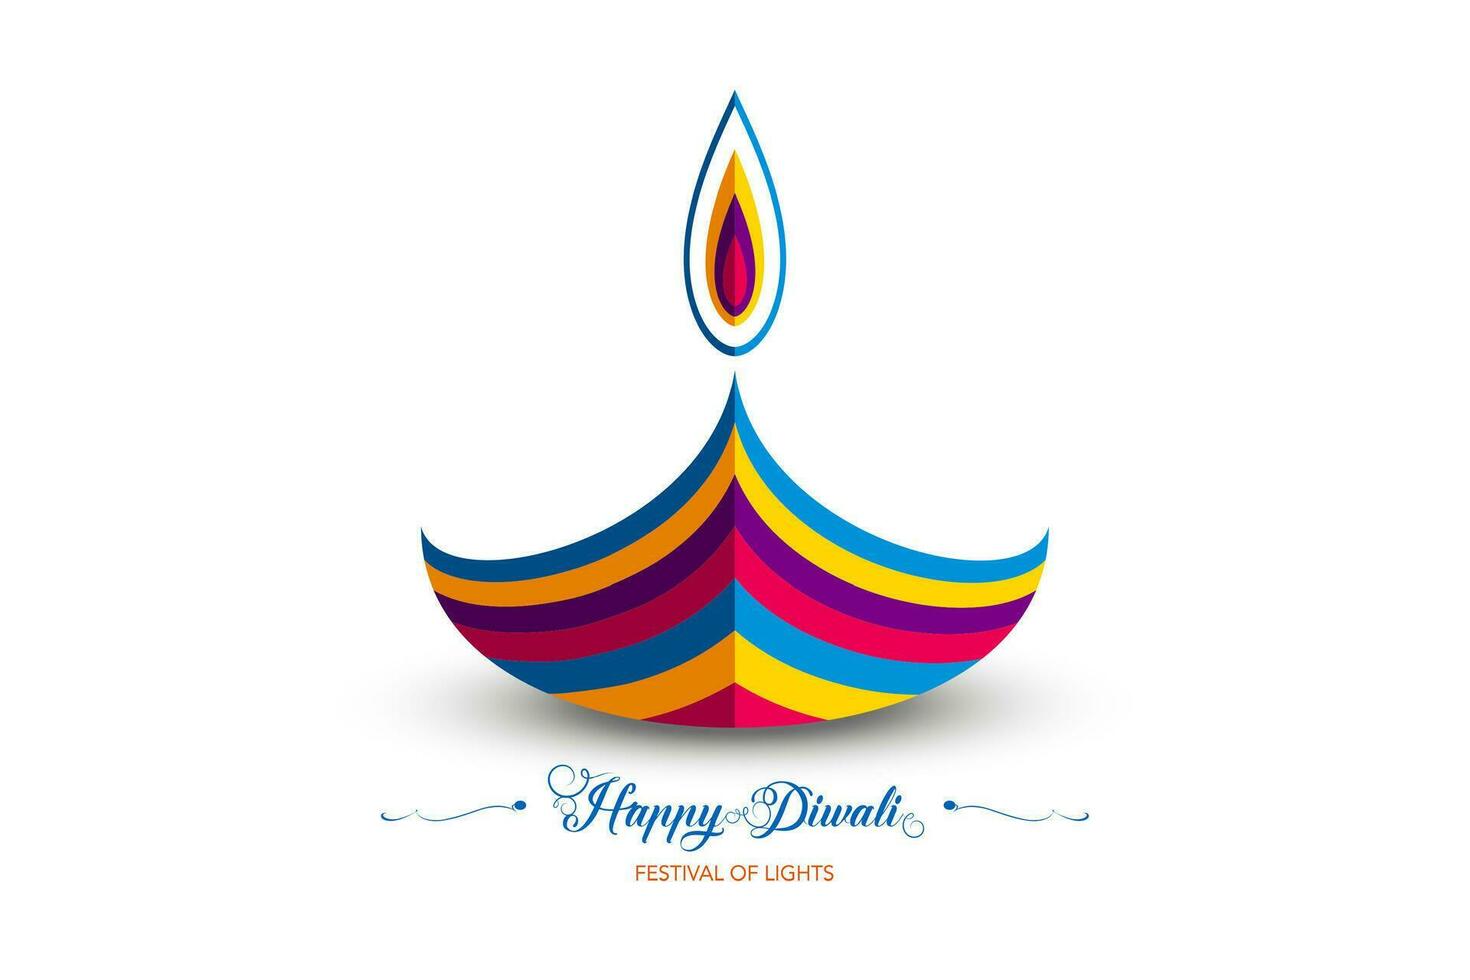 contento diwali festival de luces India celebracion vistoso logo modelo. gráfico bandera diseño de indio diya petróleo lámpara, papel cortar diseño en vibrante colores. vector aislado en blanco antecedentes